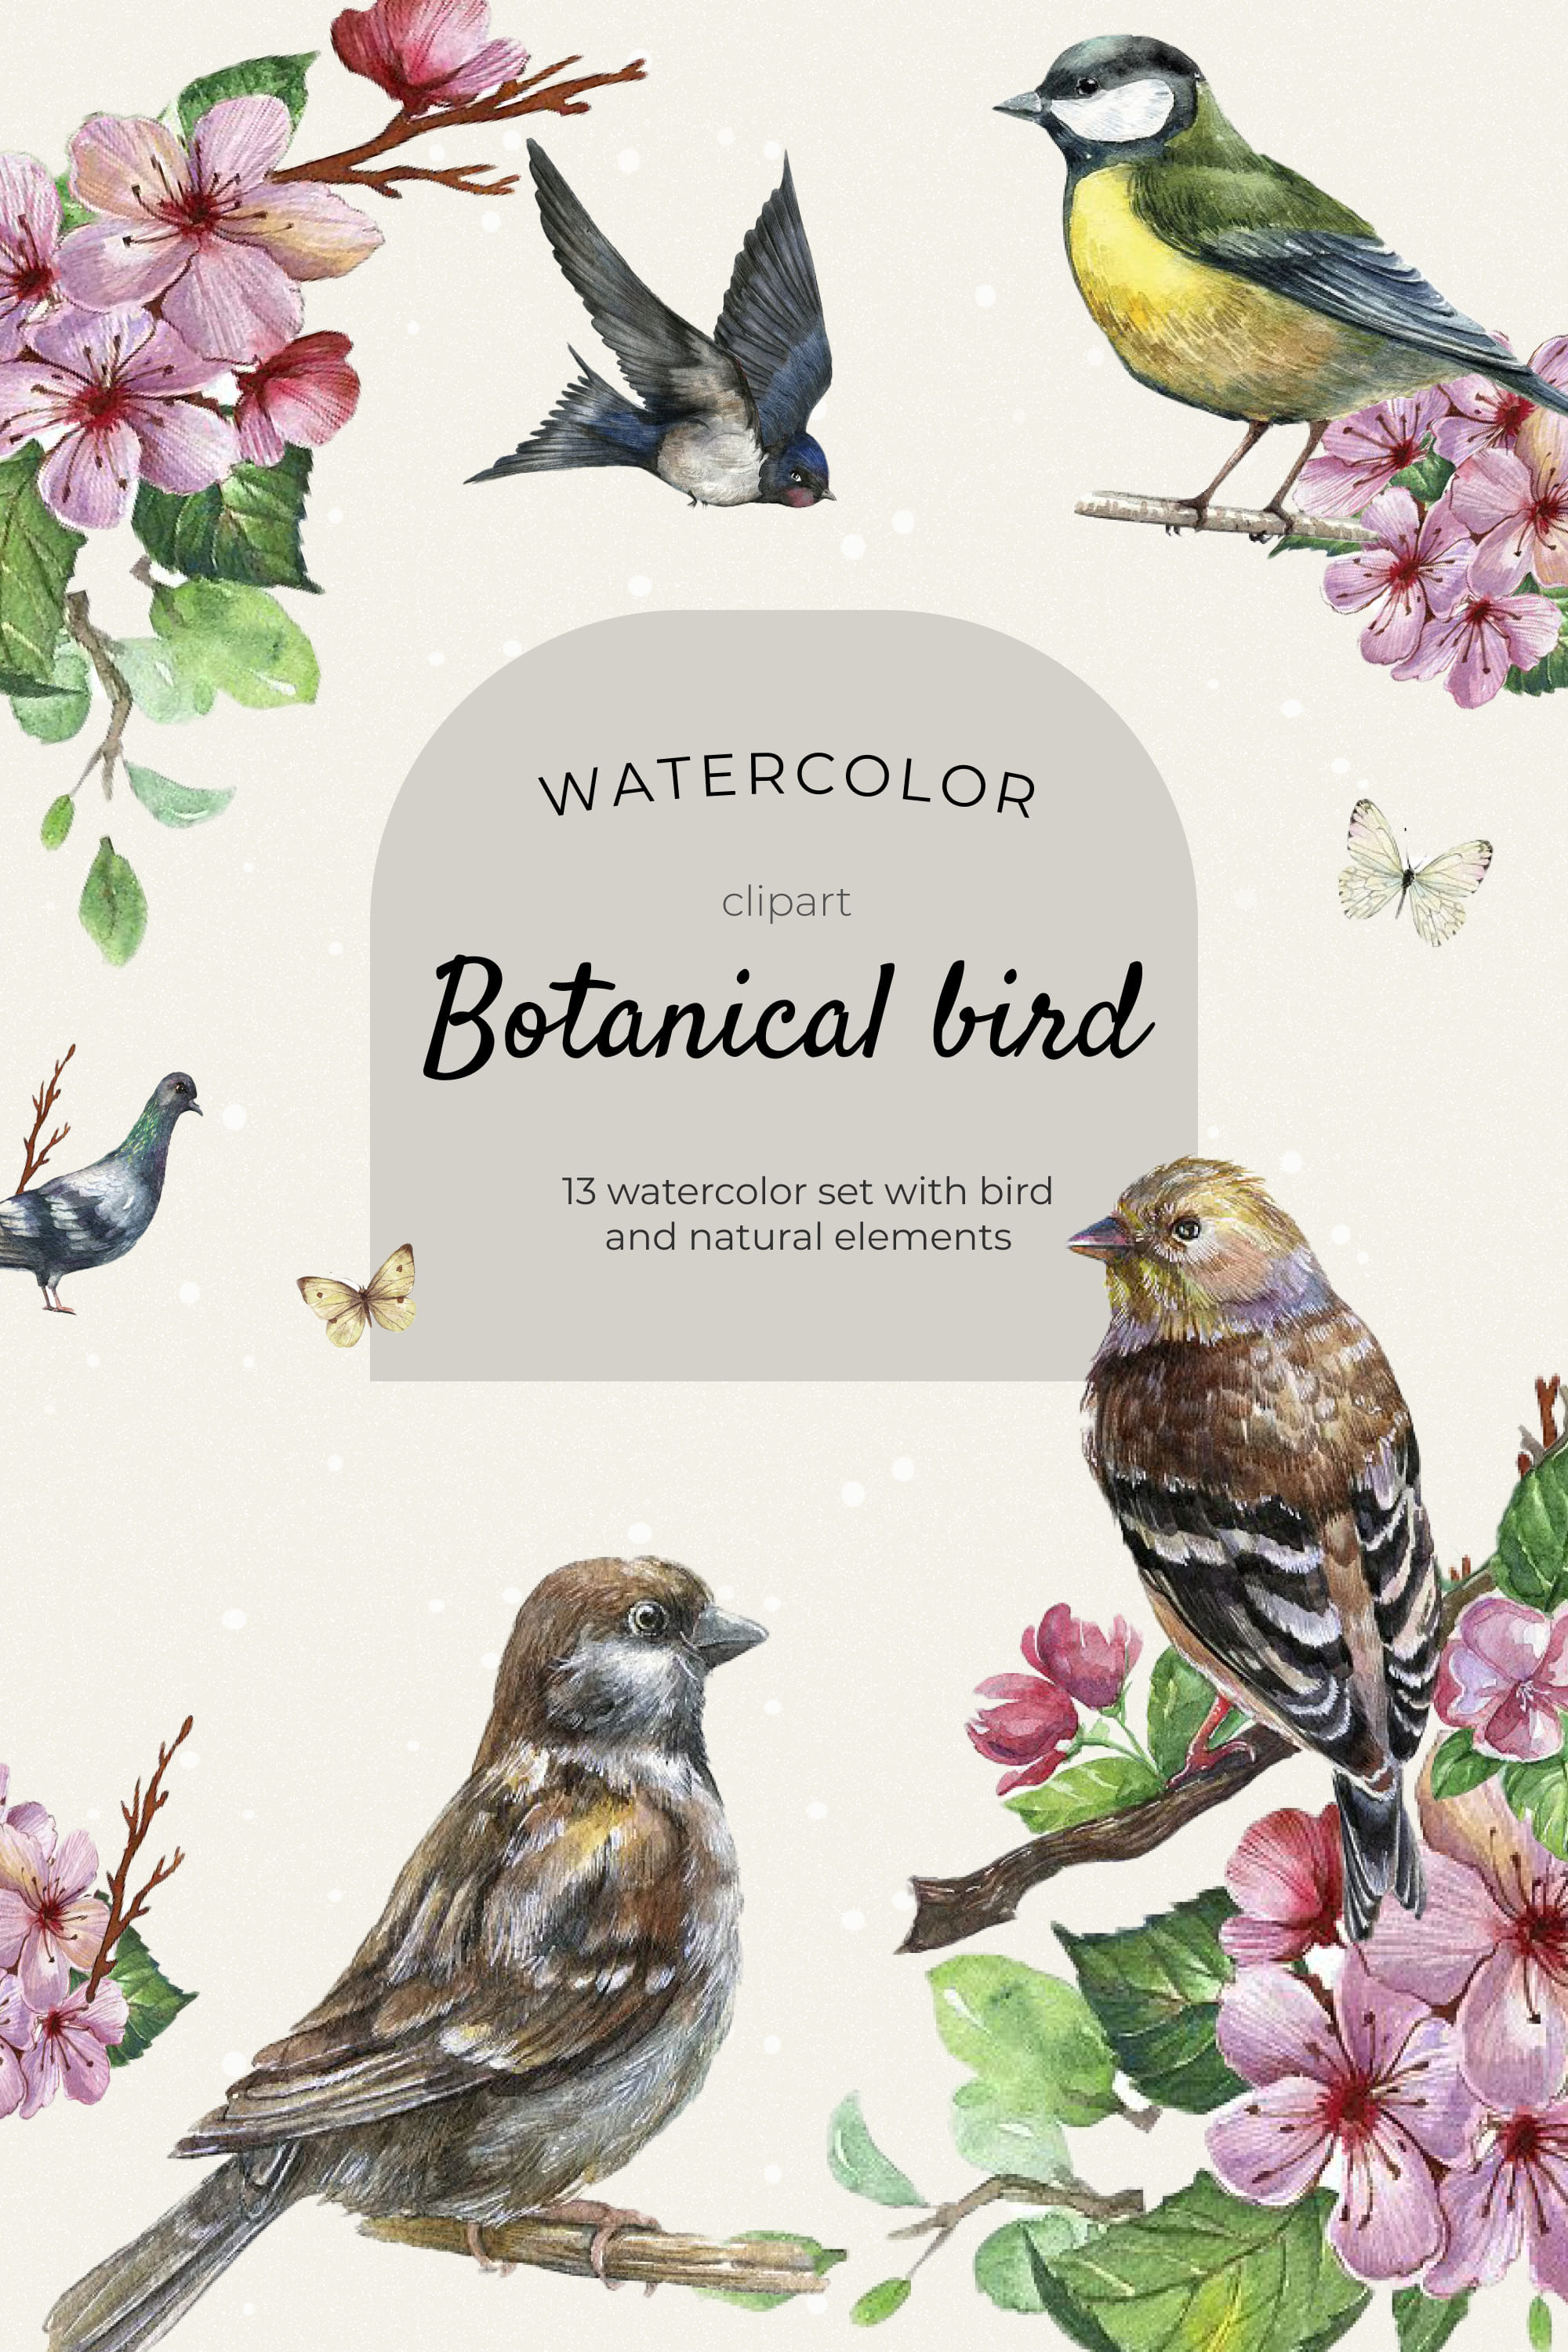 Watercolor botanical bird clipart - pinterest image preview.